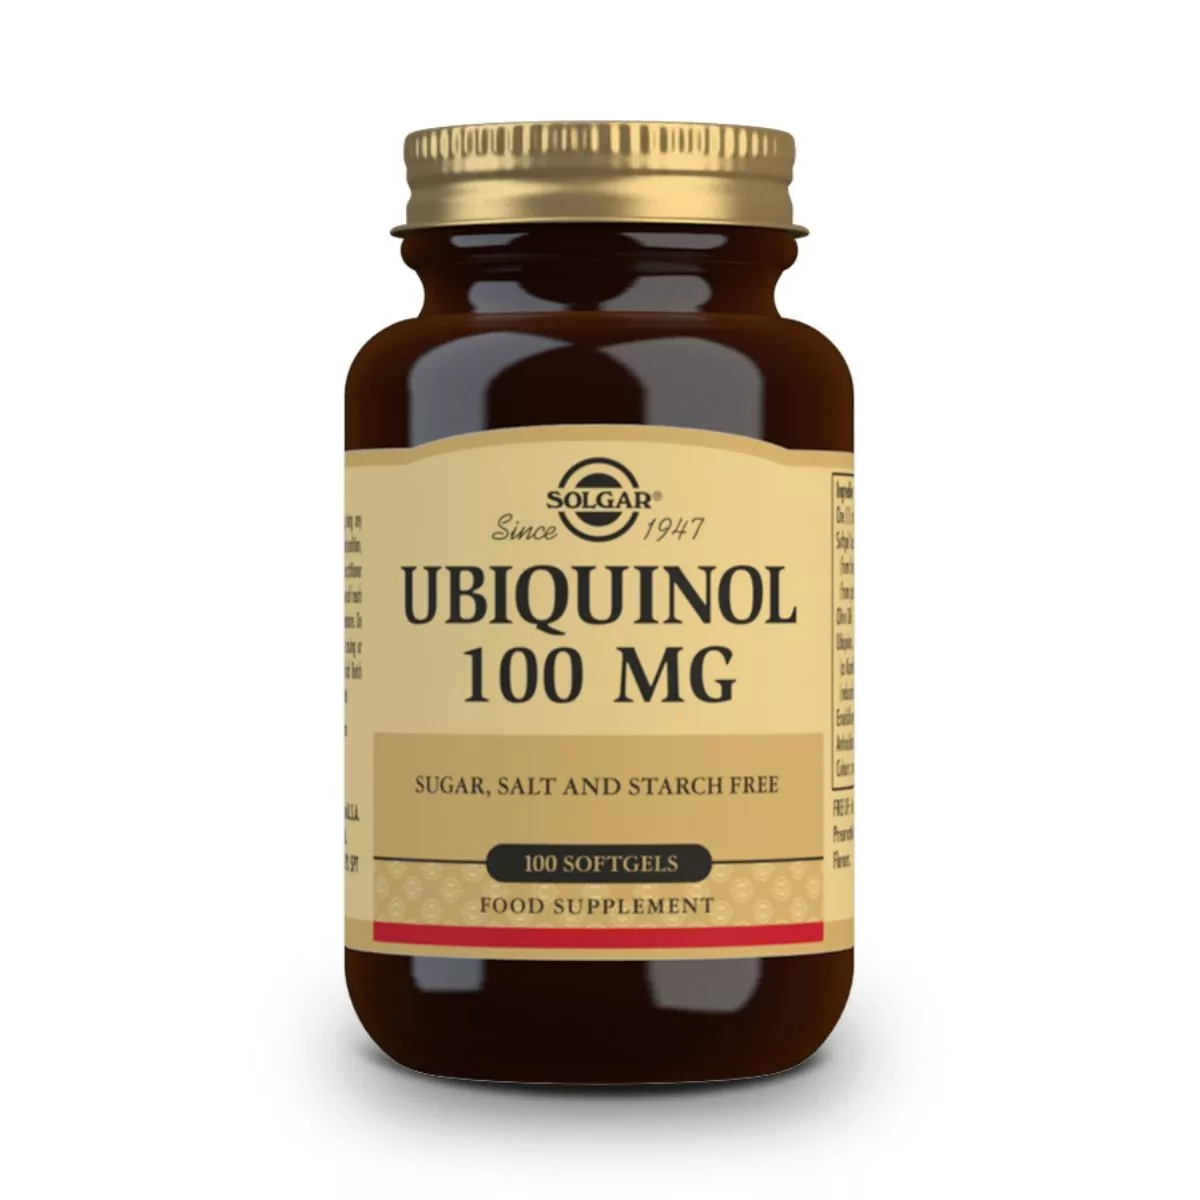 Ubiquinol 100 mg – 50 Cápsulas Blandas